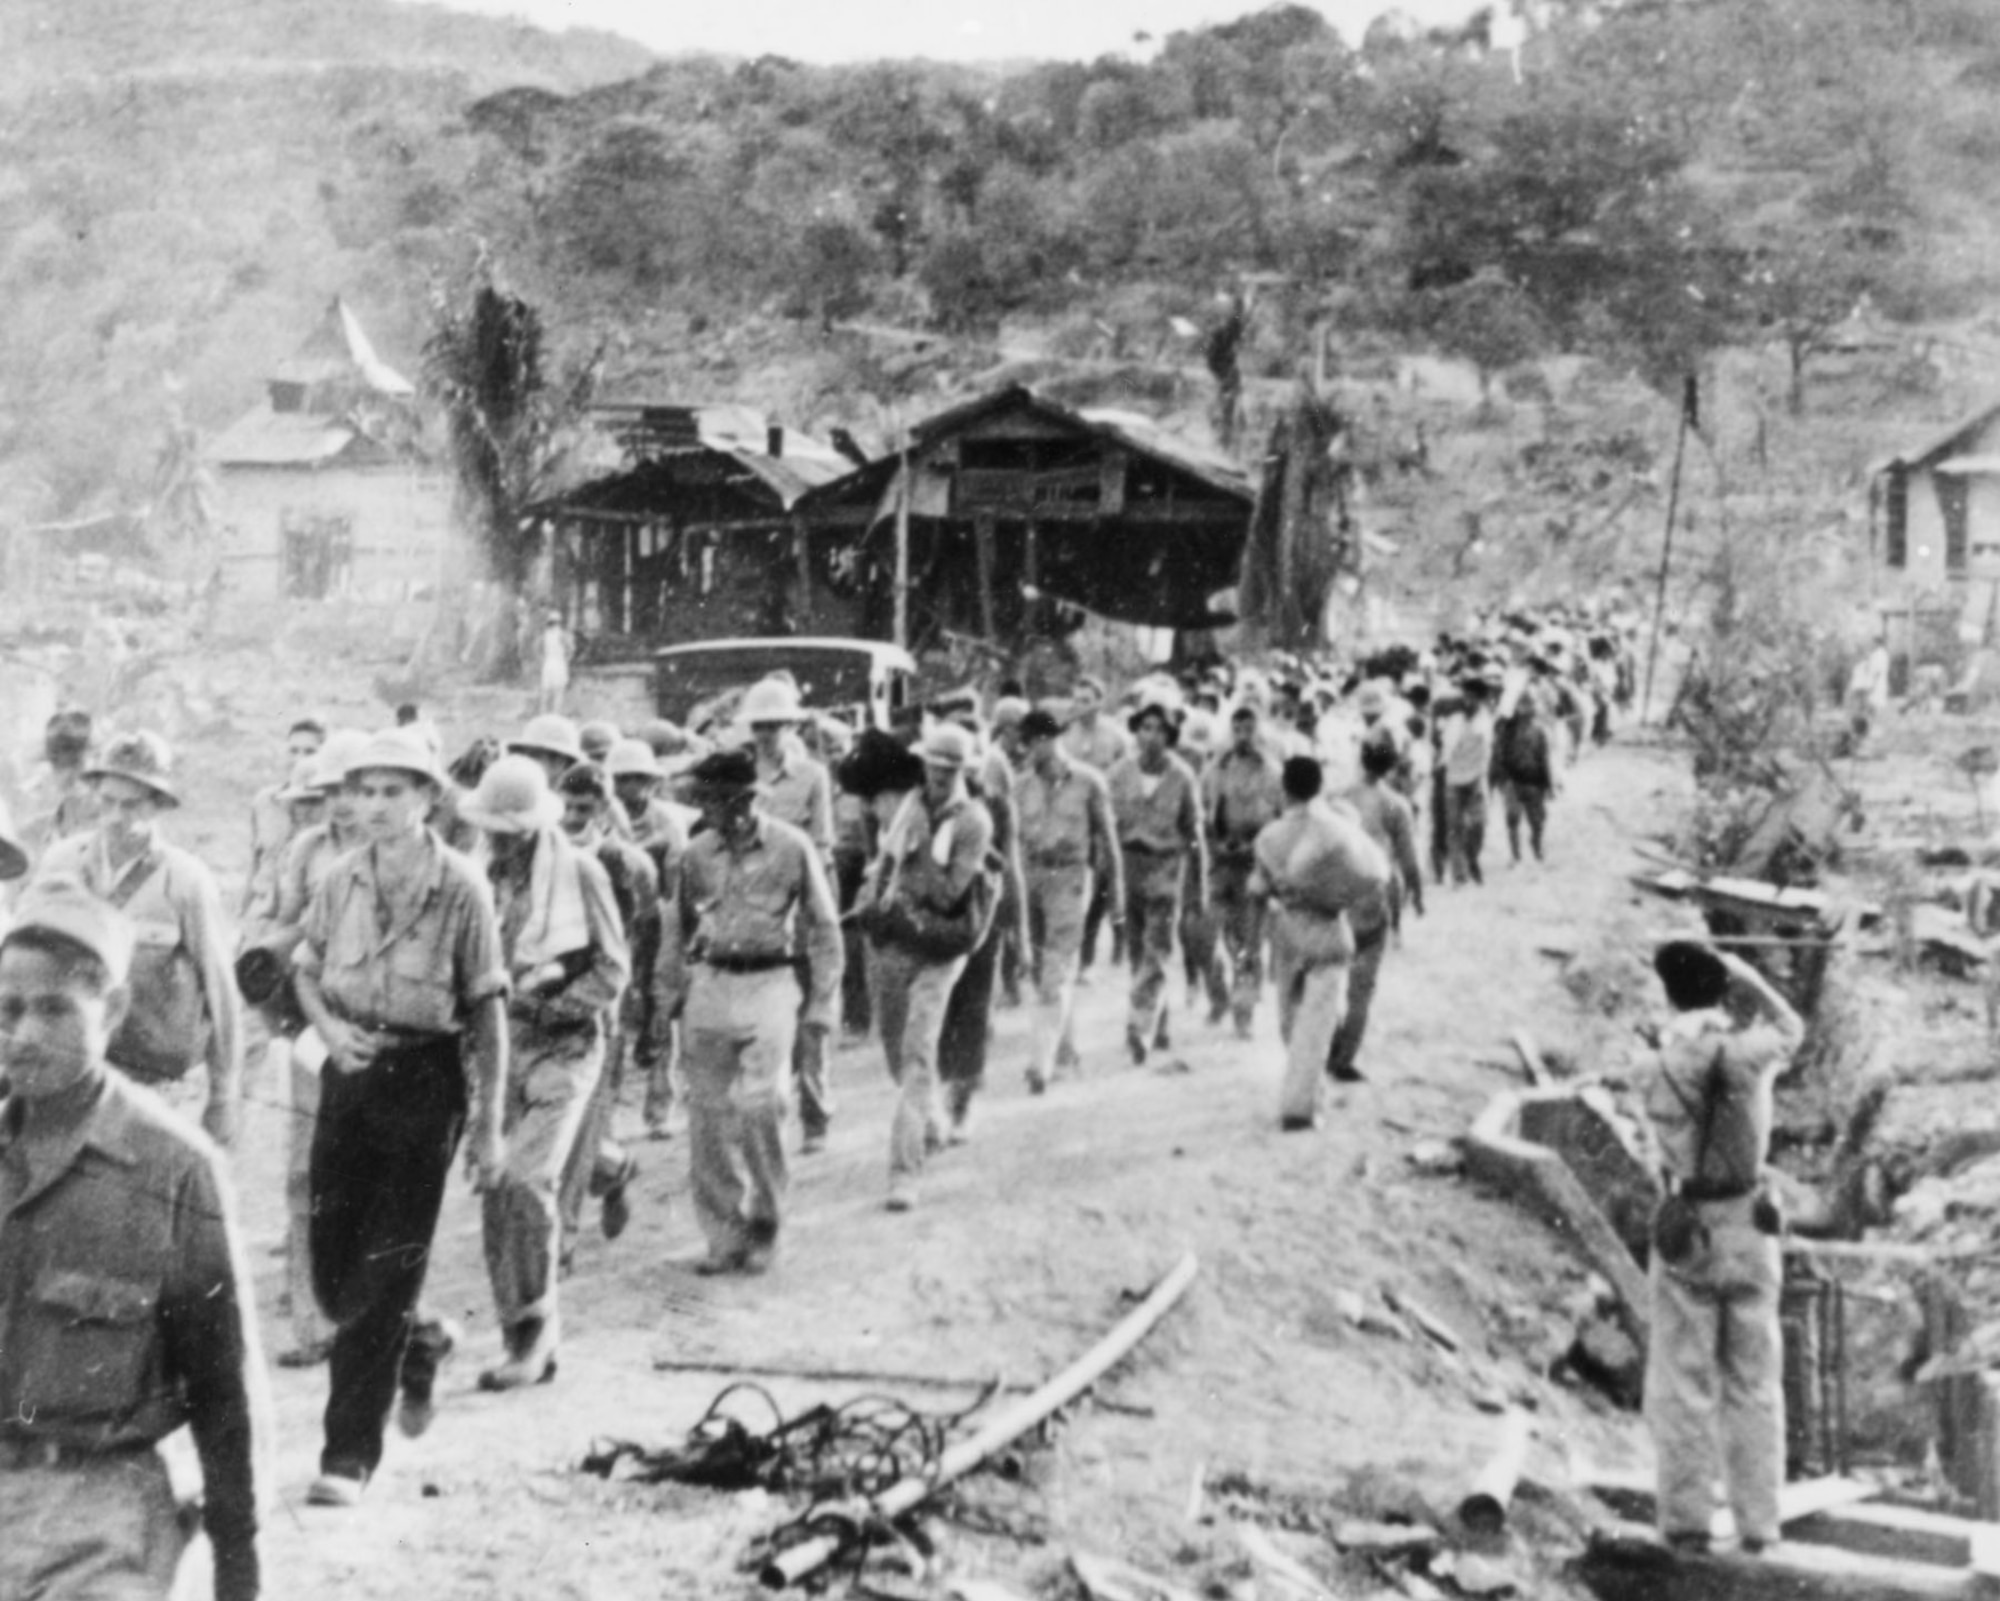 POWs on the Bataan Death March. (U.S. Air Force photo)